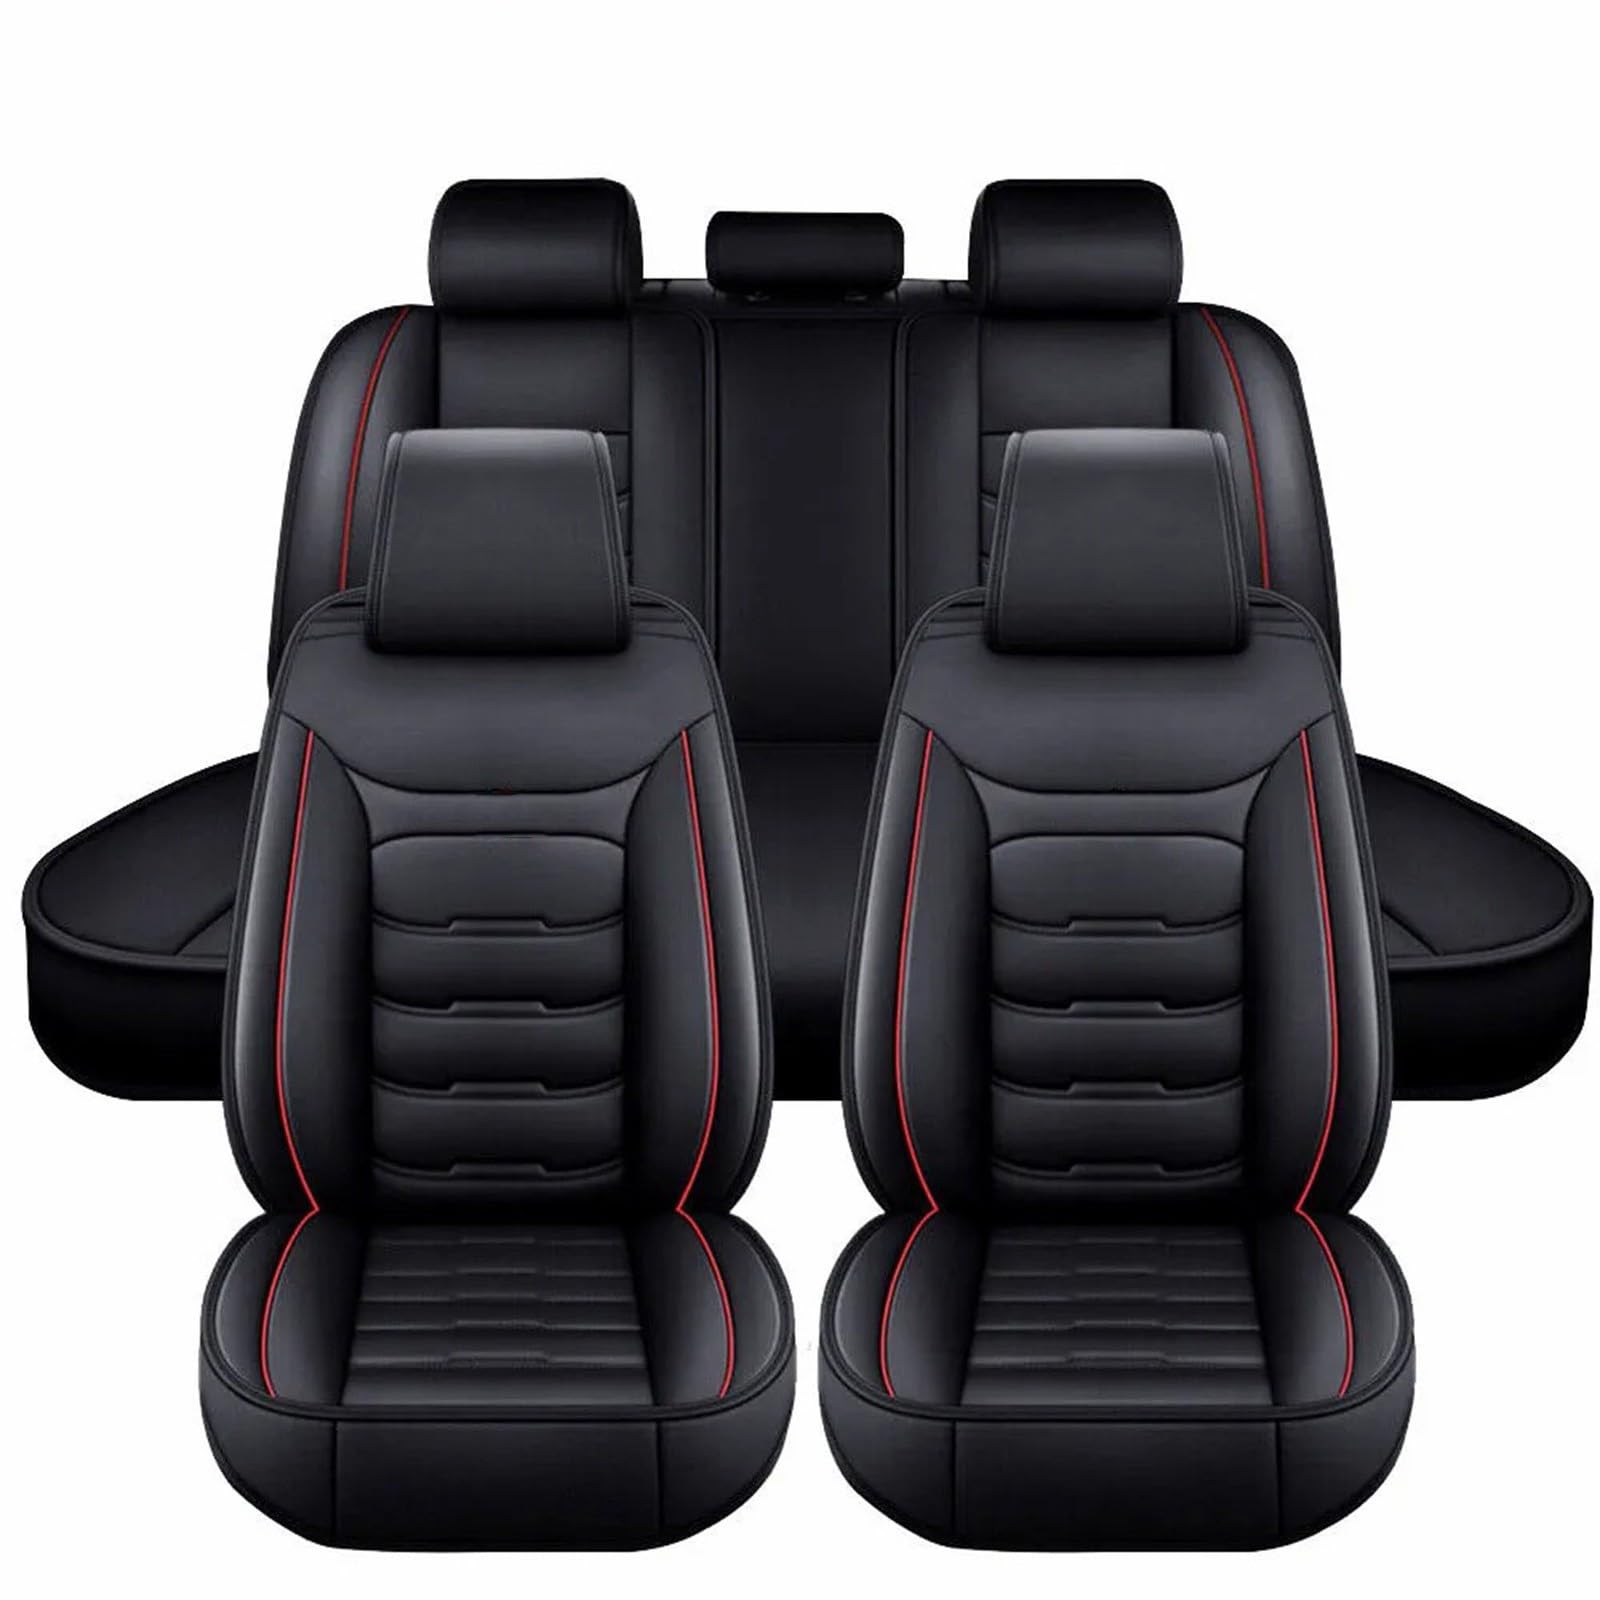 Full Set Auto Sitzbezüge für Audi A3 (8L) 5 doors,Wasserdichtes VerschleißFest Leder Auto Sitzschutz,5 Stück Autositzbezüge von SePkus